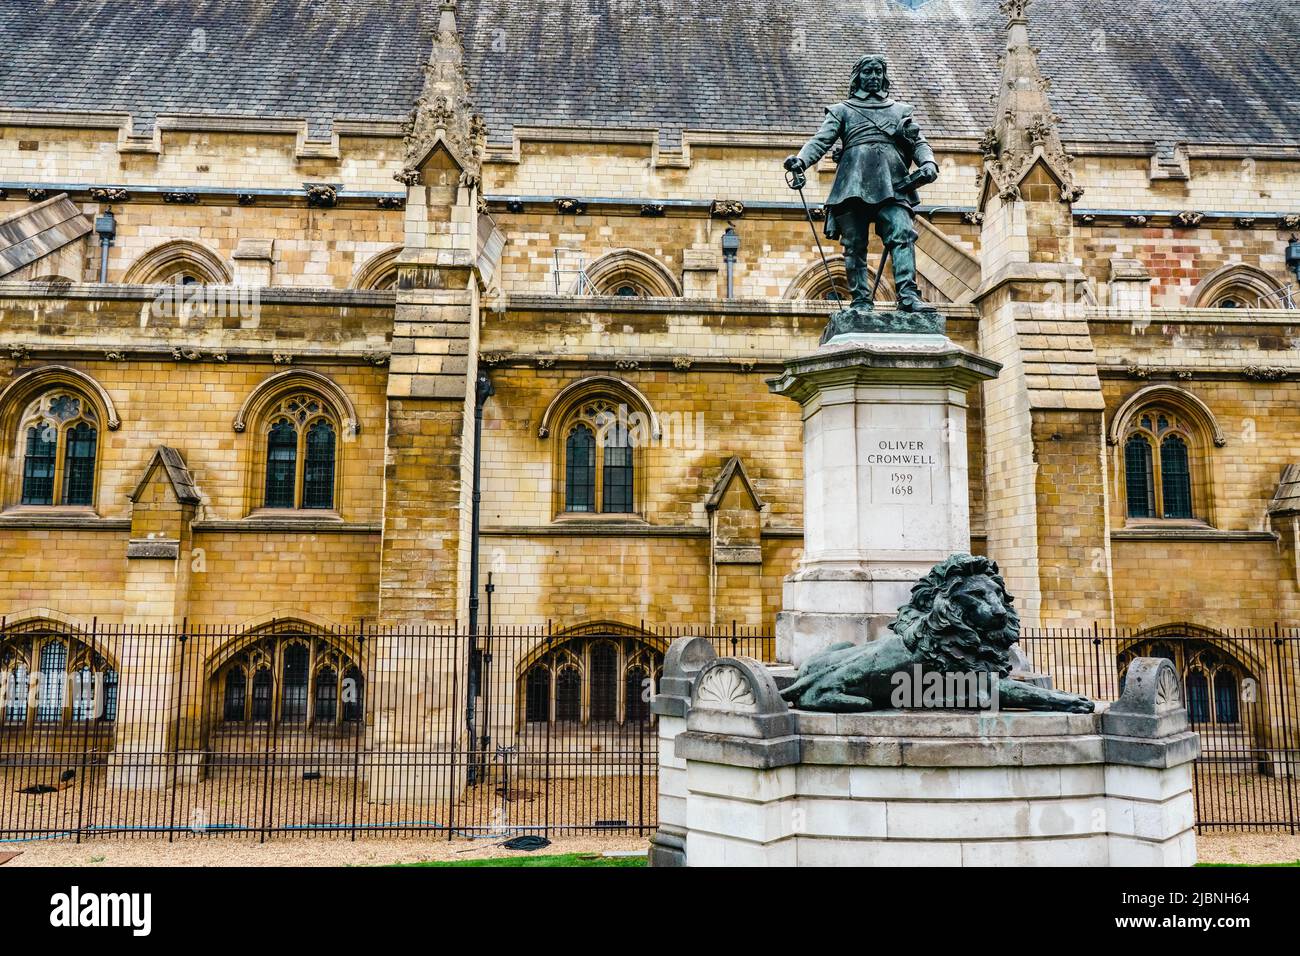 London, England - 23.04.2022: Oliver Cromwell-Denkmal vor dem Houses of Parliament, Westminster, London. Fotos in hoher Qualität Stockfoto